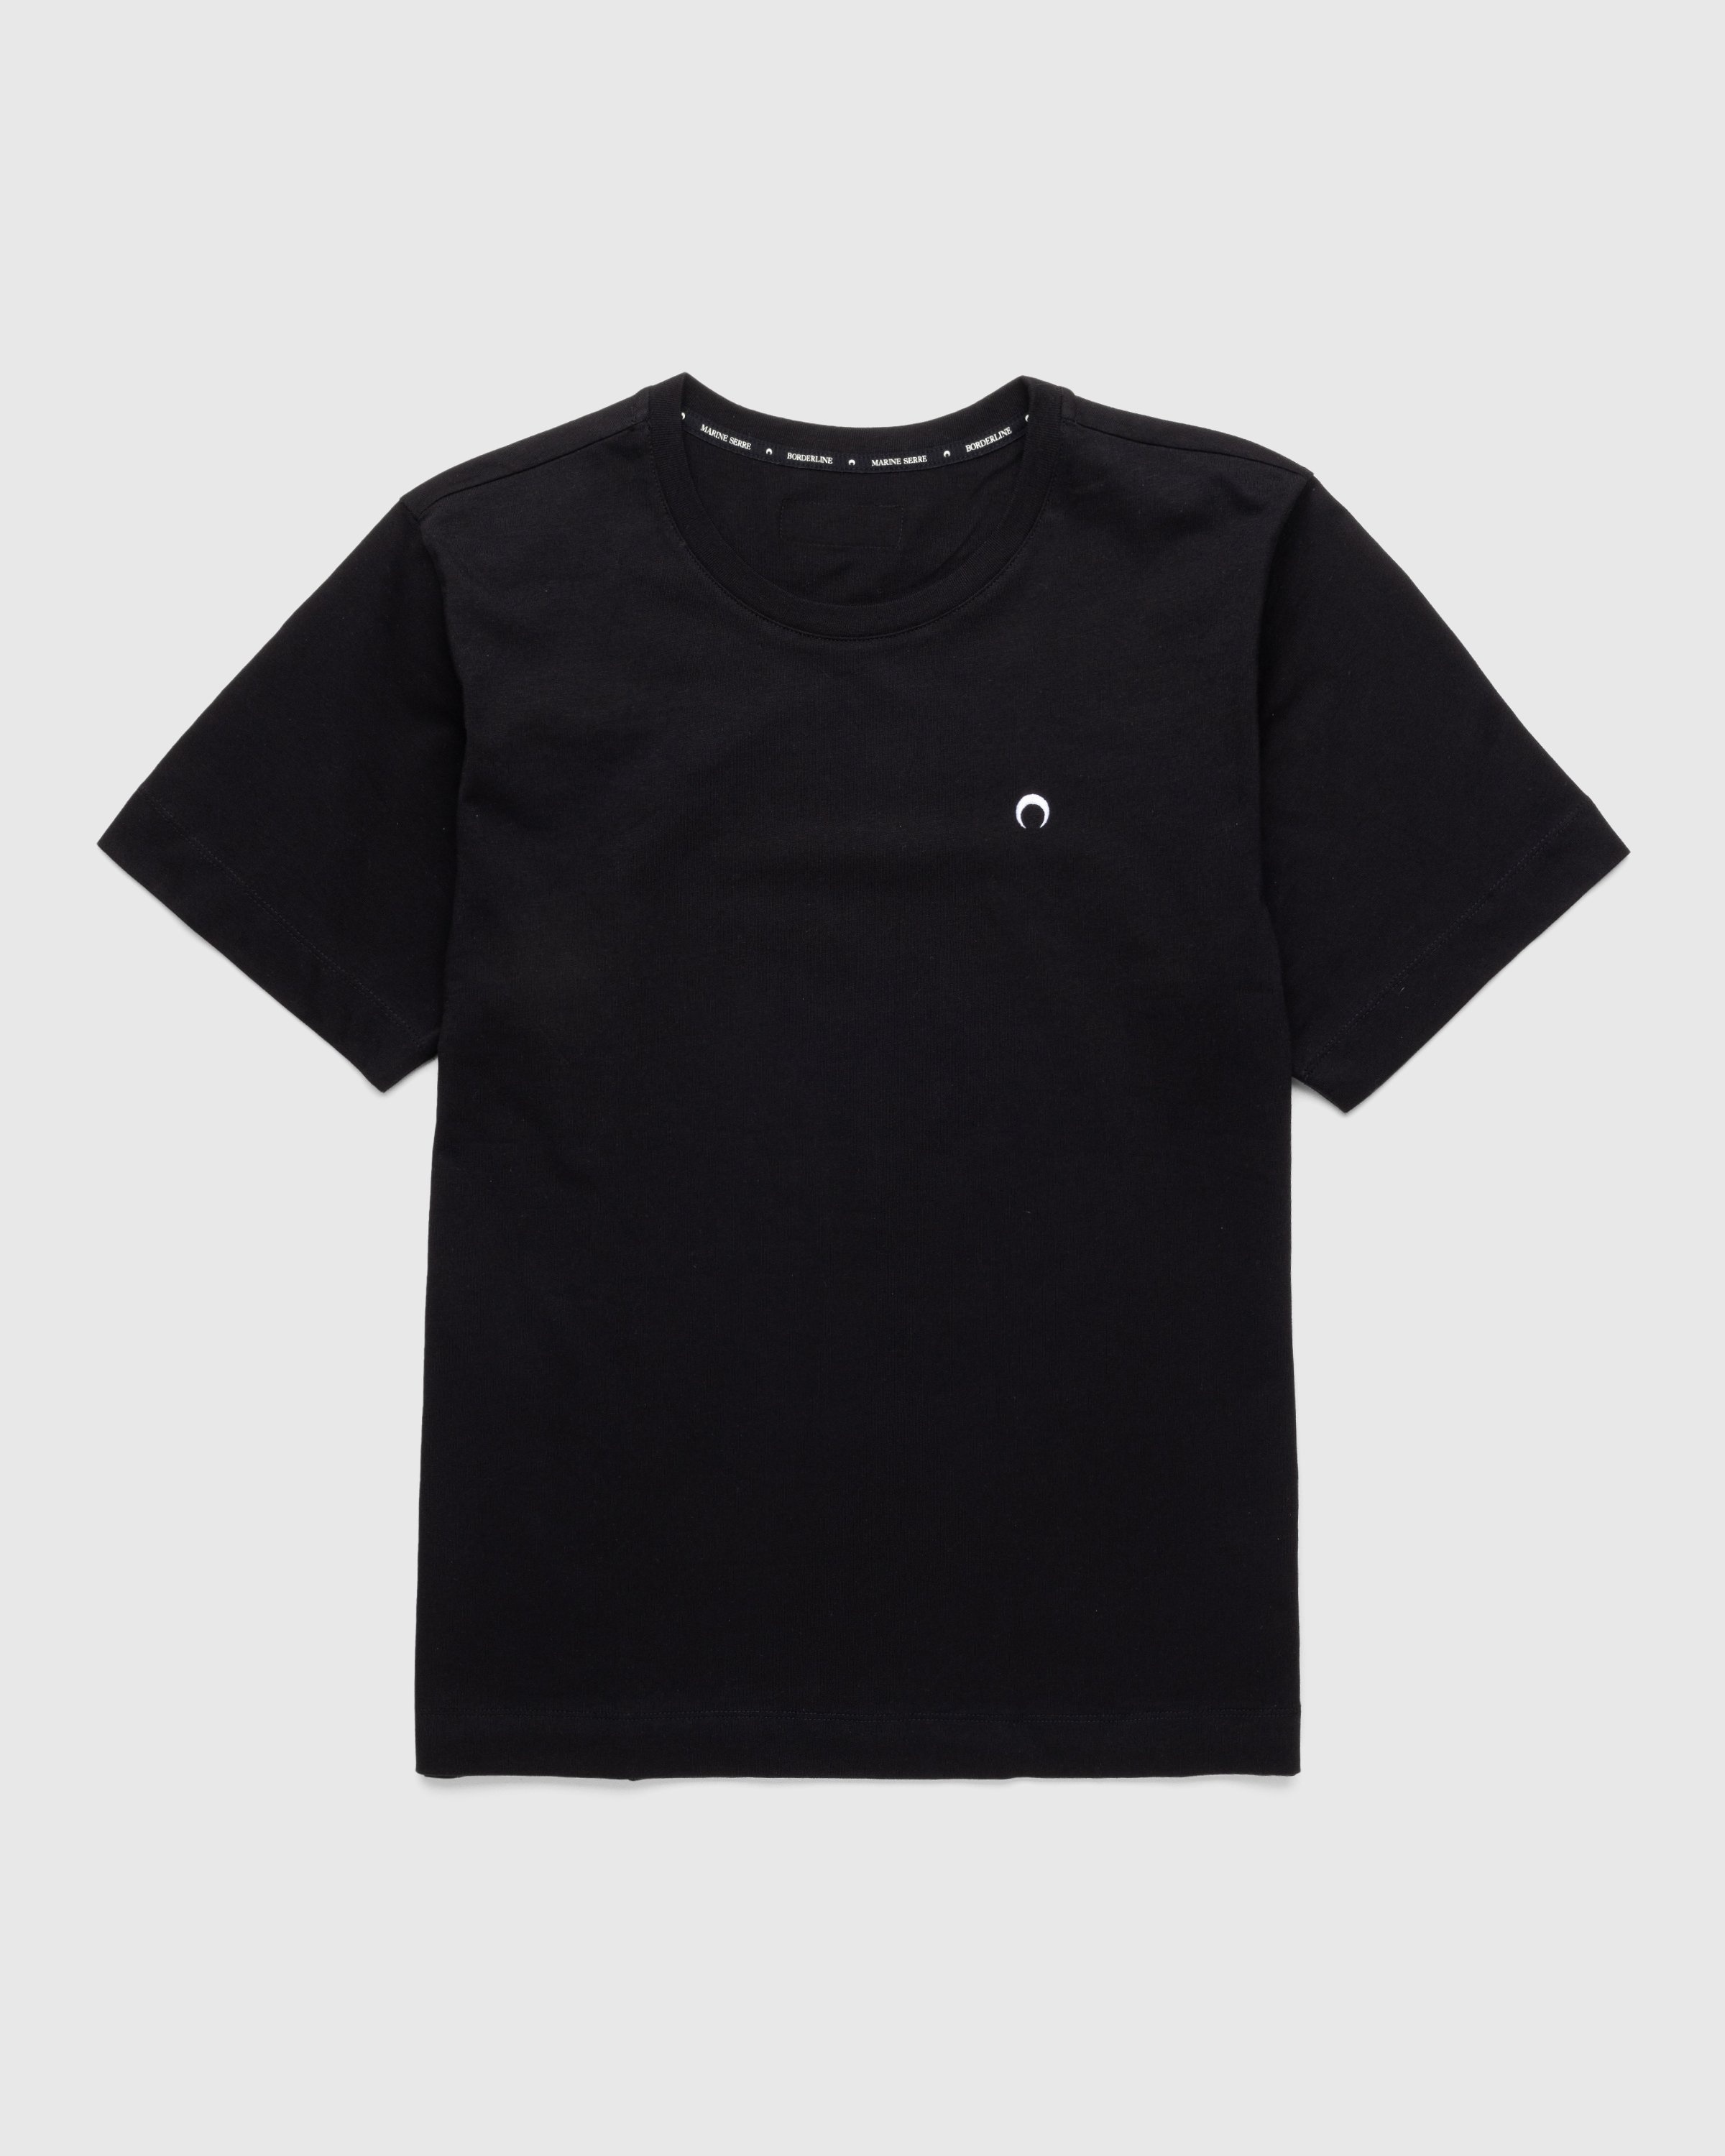 Marine Serre – Organic Cotton Regular T-Shirt Black - T-shirts - Black - Image 1